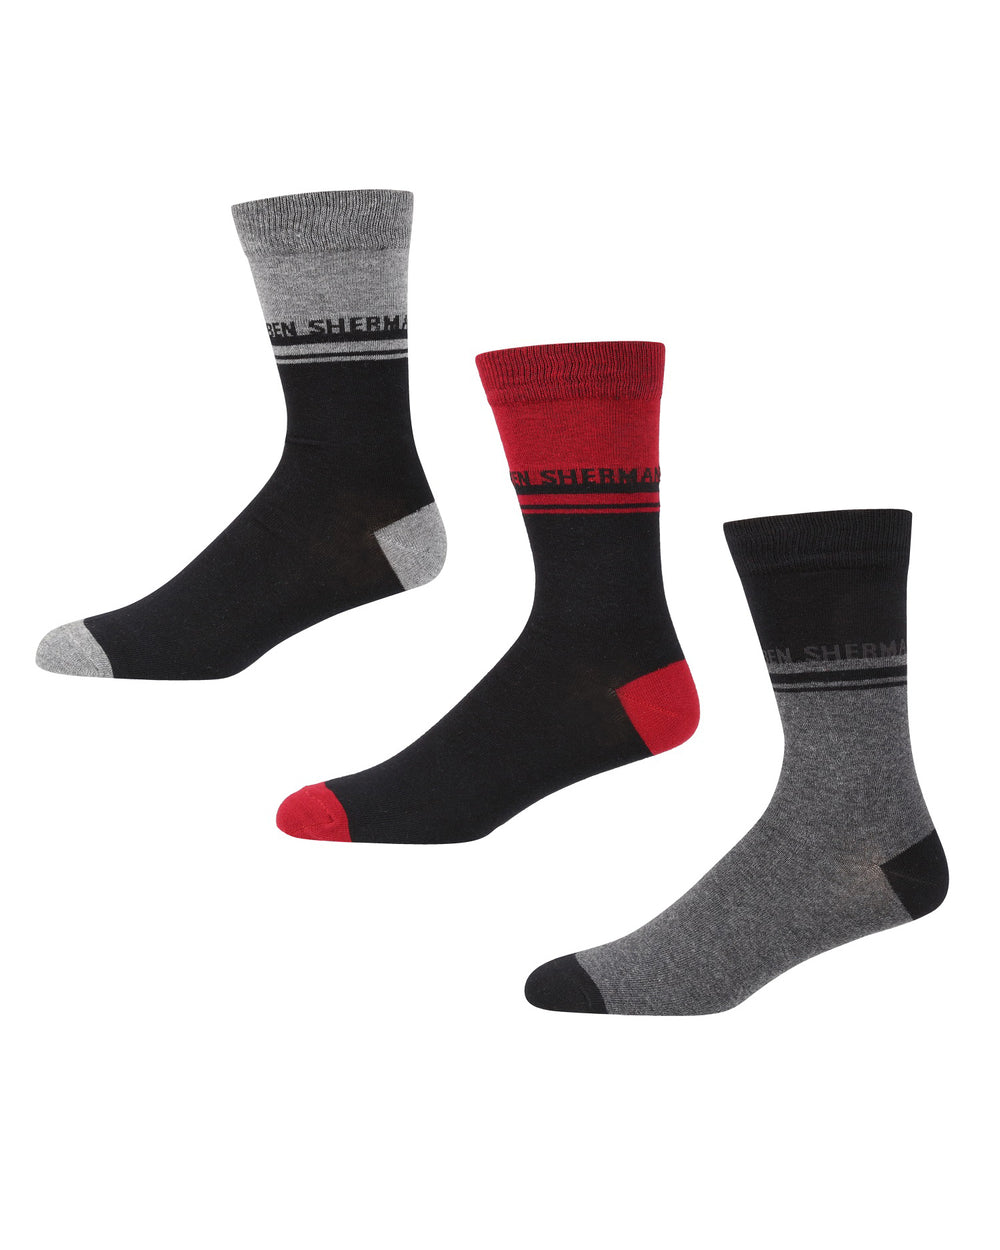 Blood Royal Men's 3-Pack Socks - Black/Grey Marl/Wine